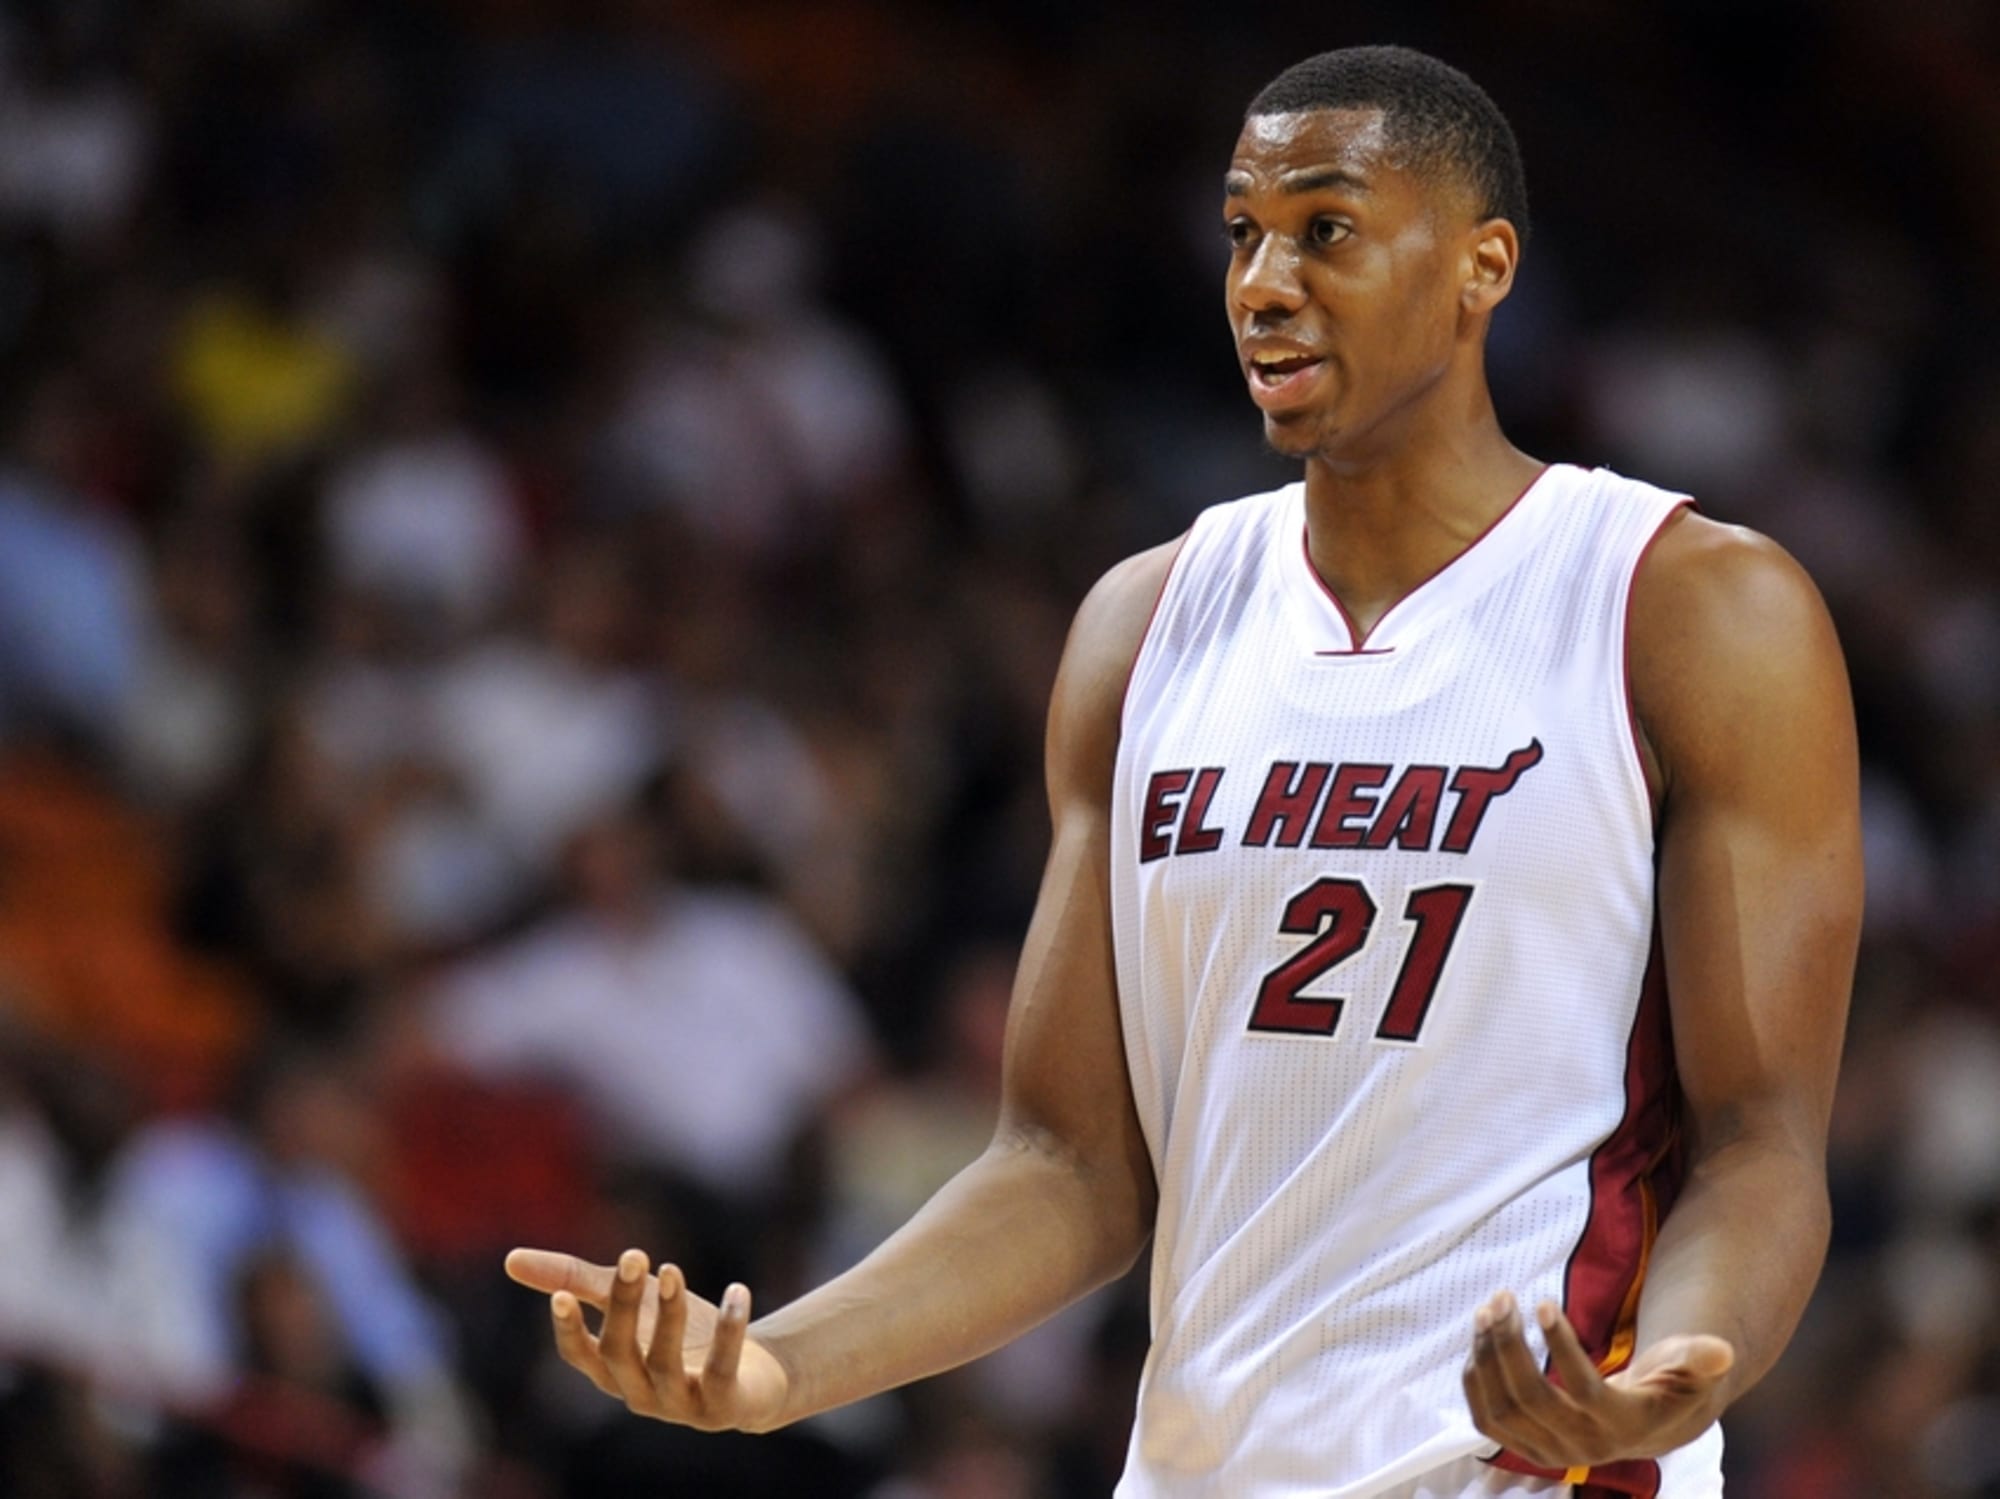 Miami Heat: Hassan Whiteside Should Play More Often